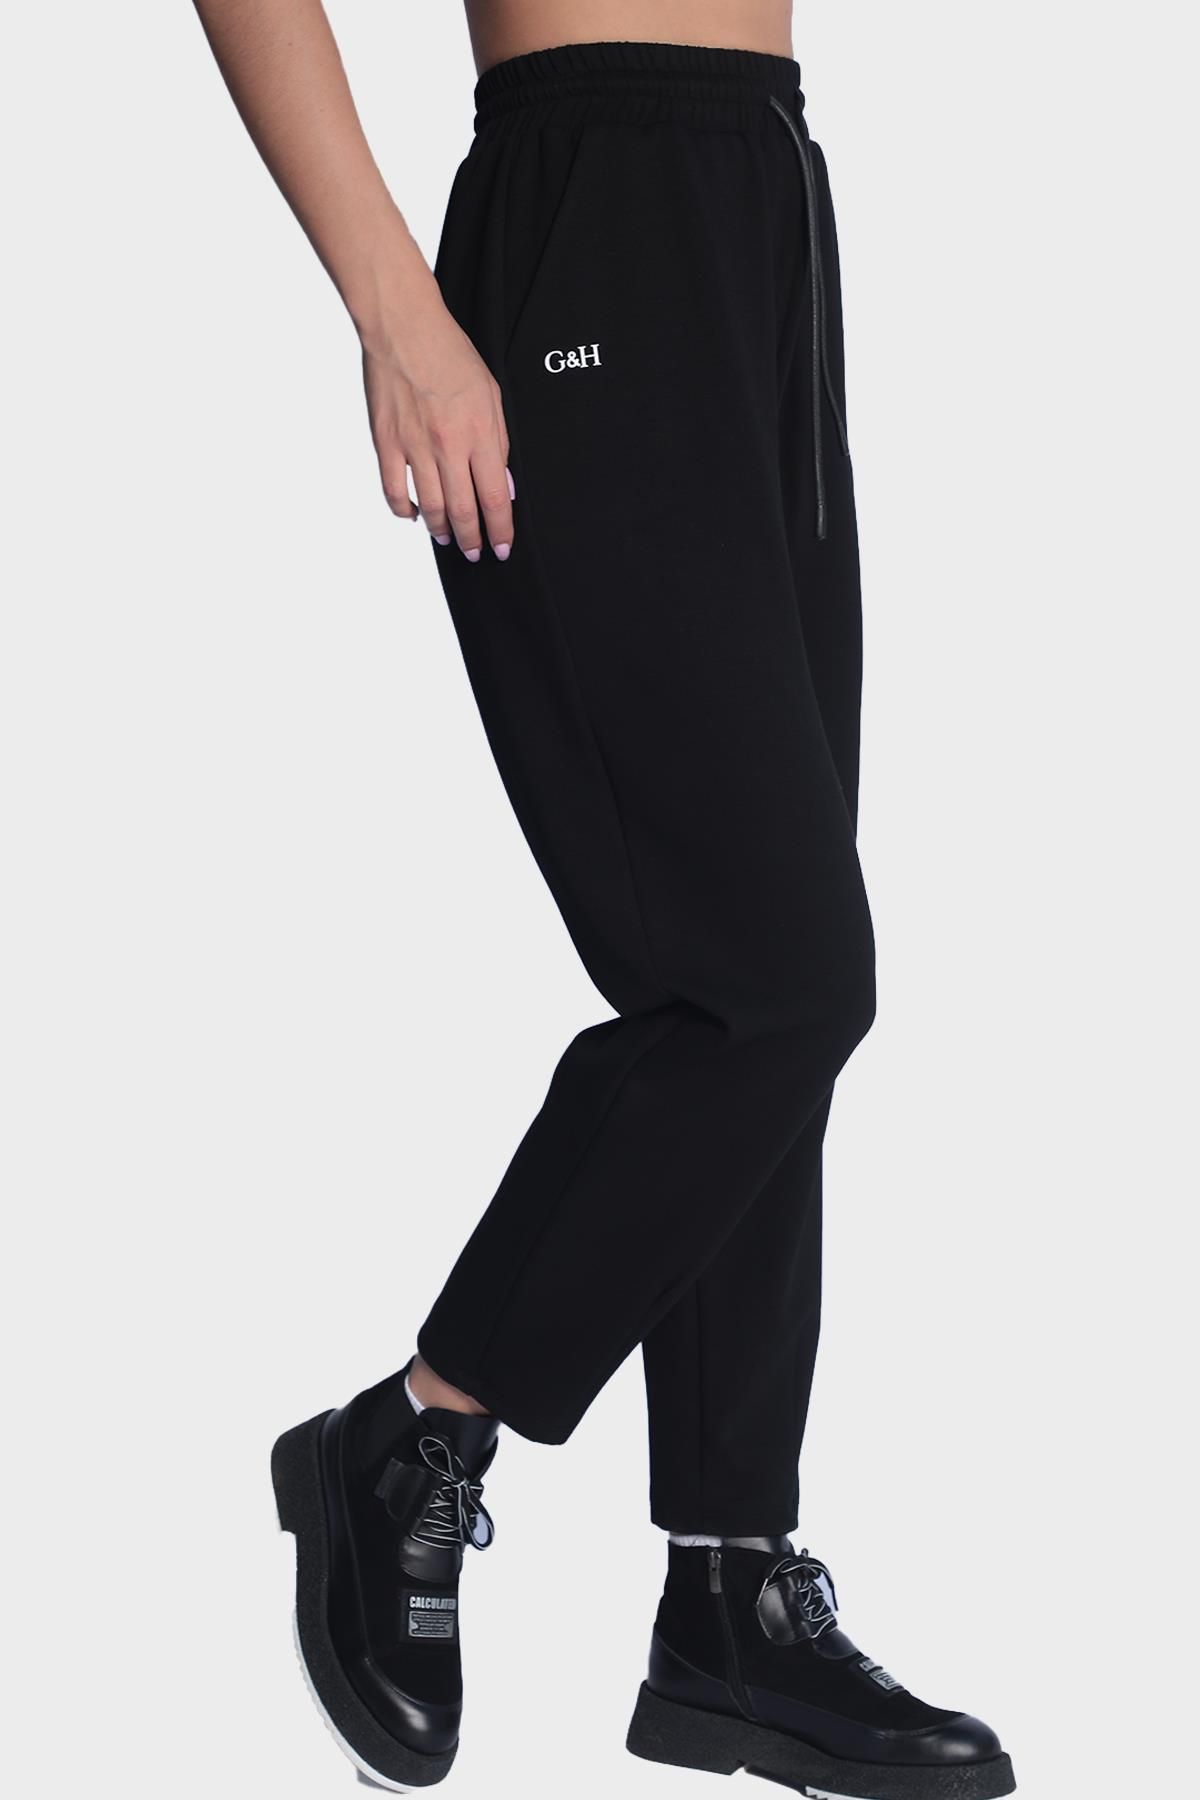 Womens jogger winter cotton sweatpants - Black